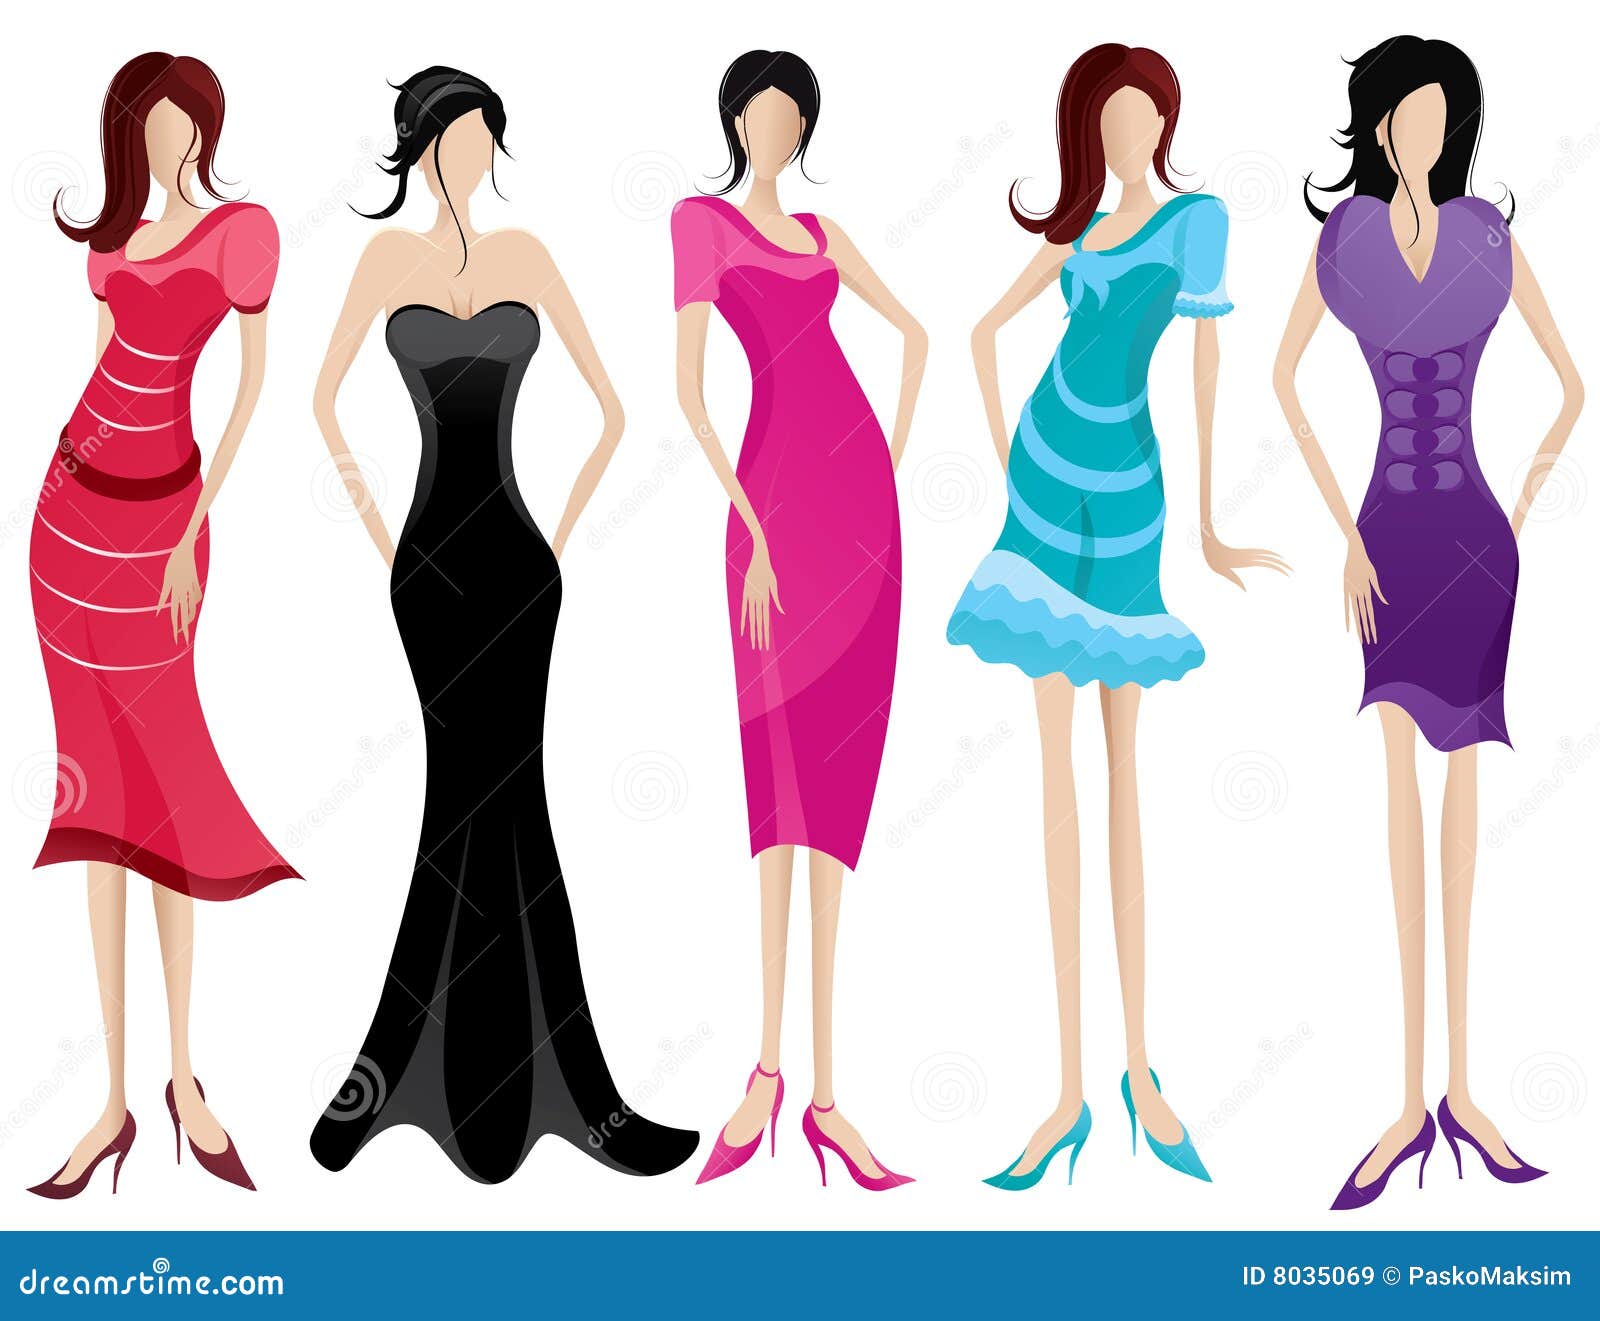 Fashionable Women Royalty Free Stock Images - Image: 8035069